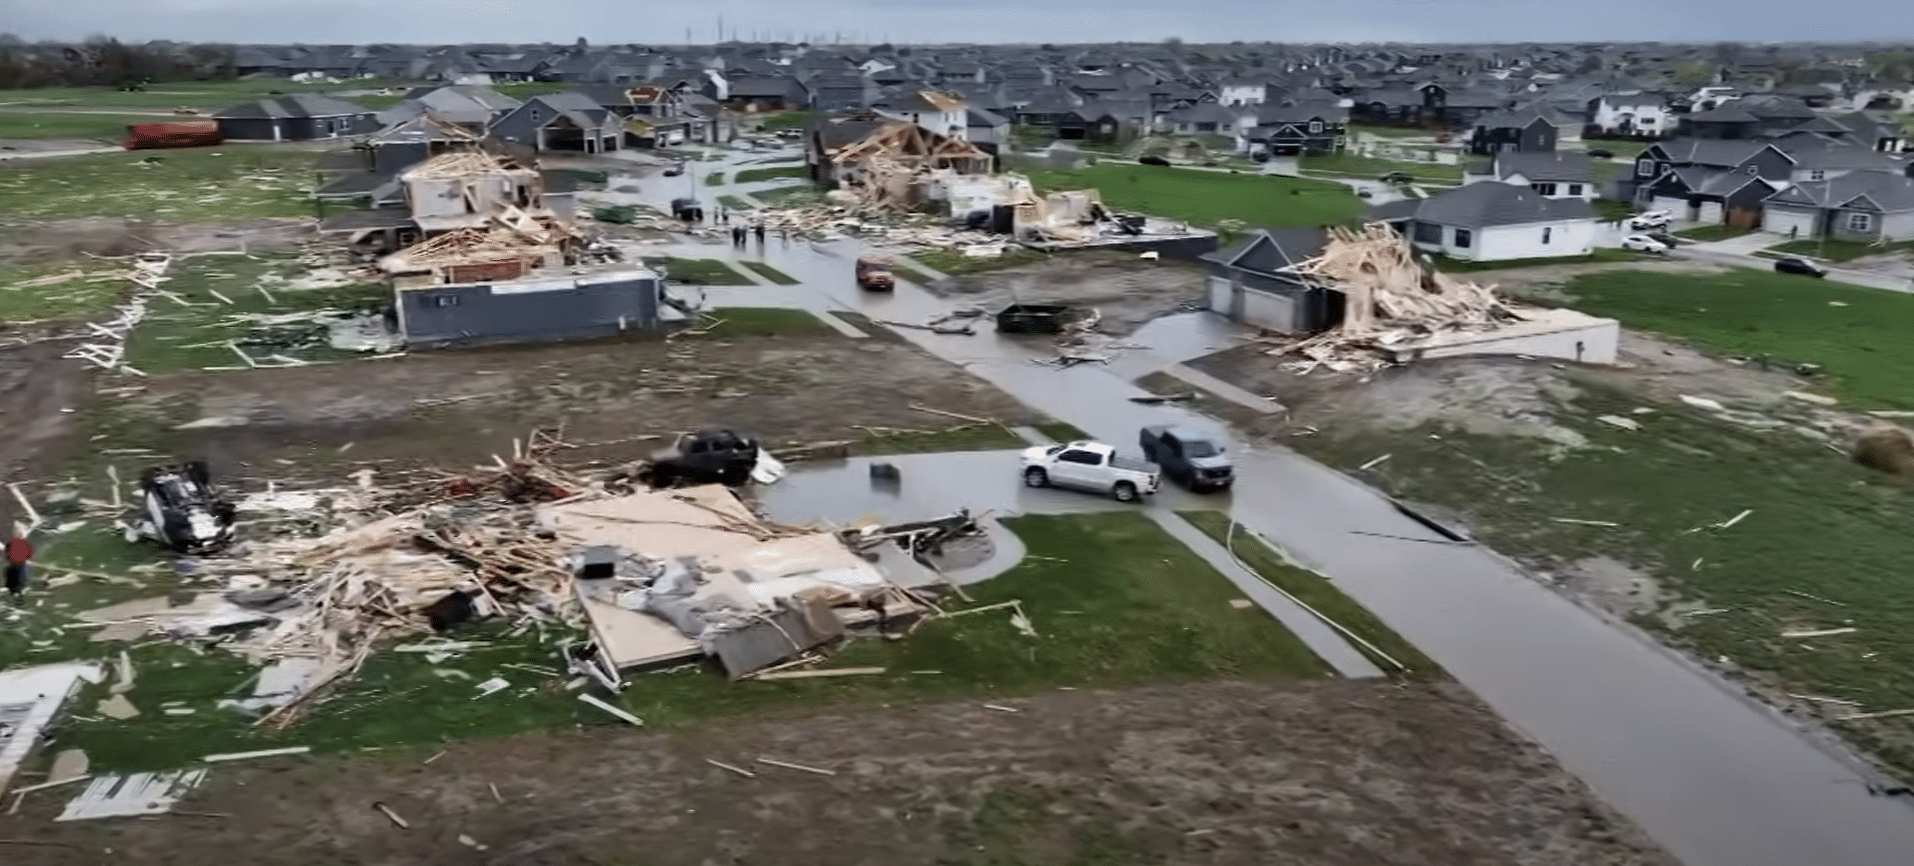 Catastrophic destruction seen in wake of massive tornadoes in Nebraska and Iowa